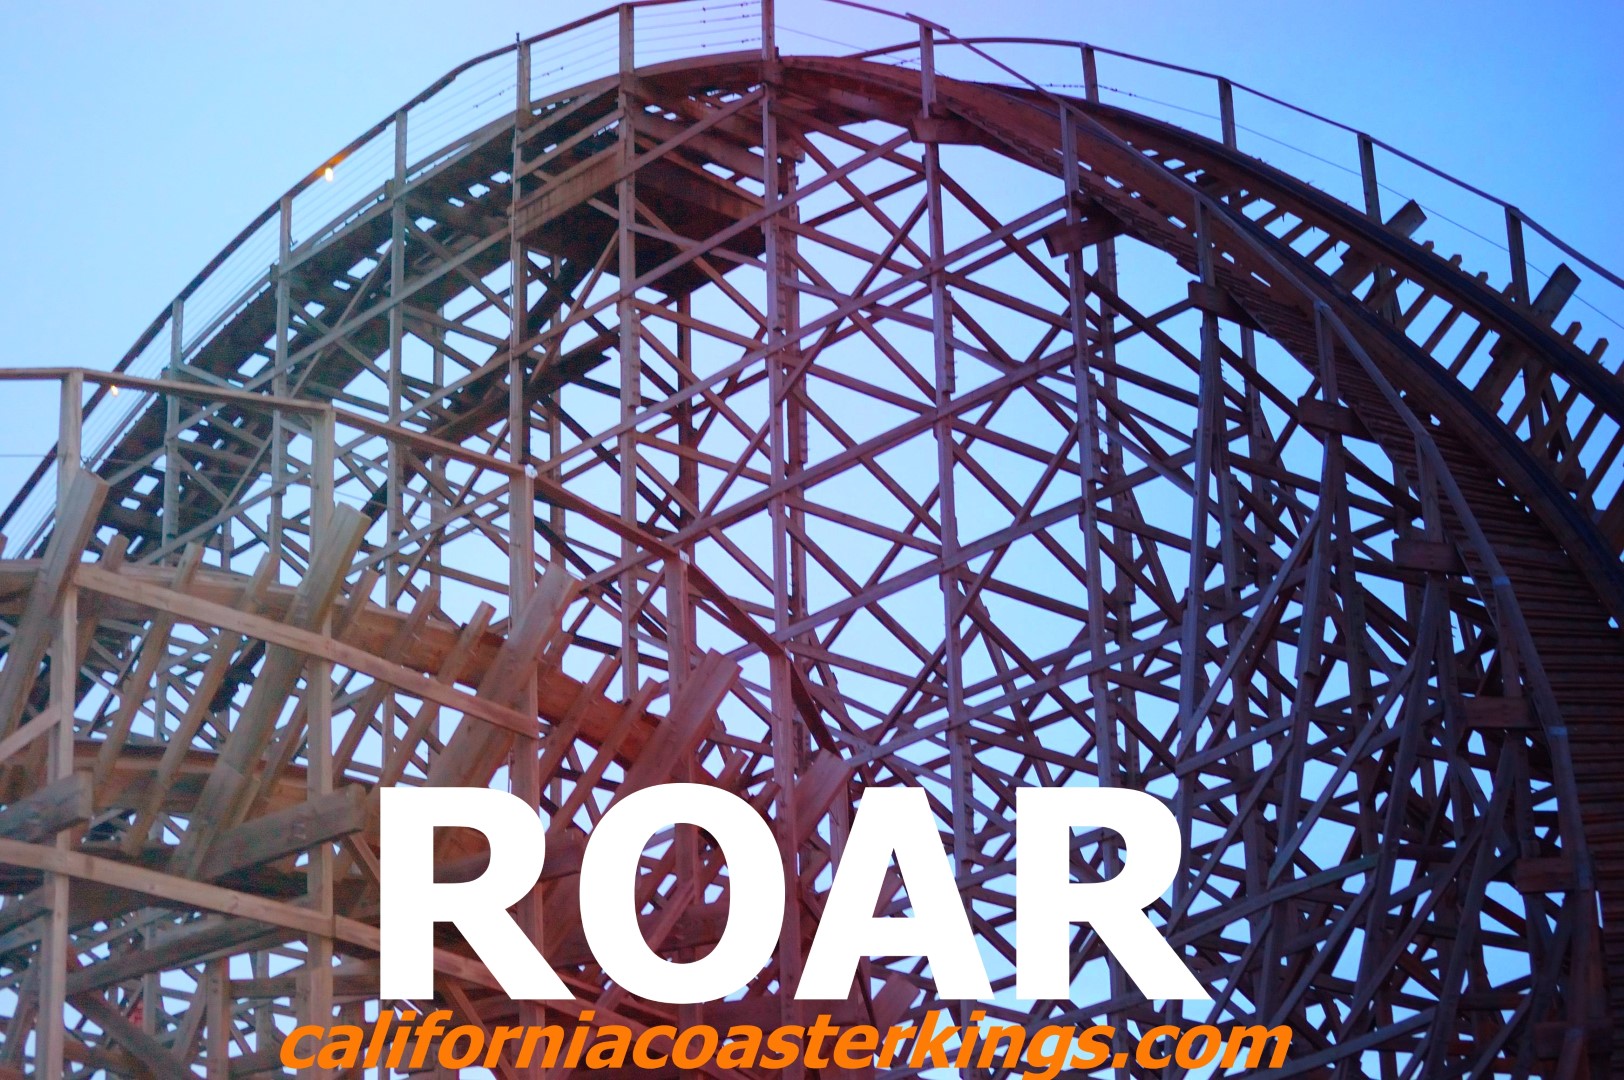 More Roar promo002 (Large)